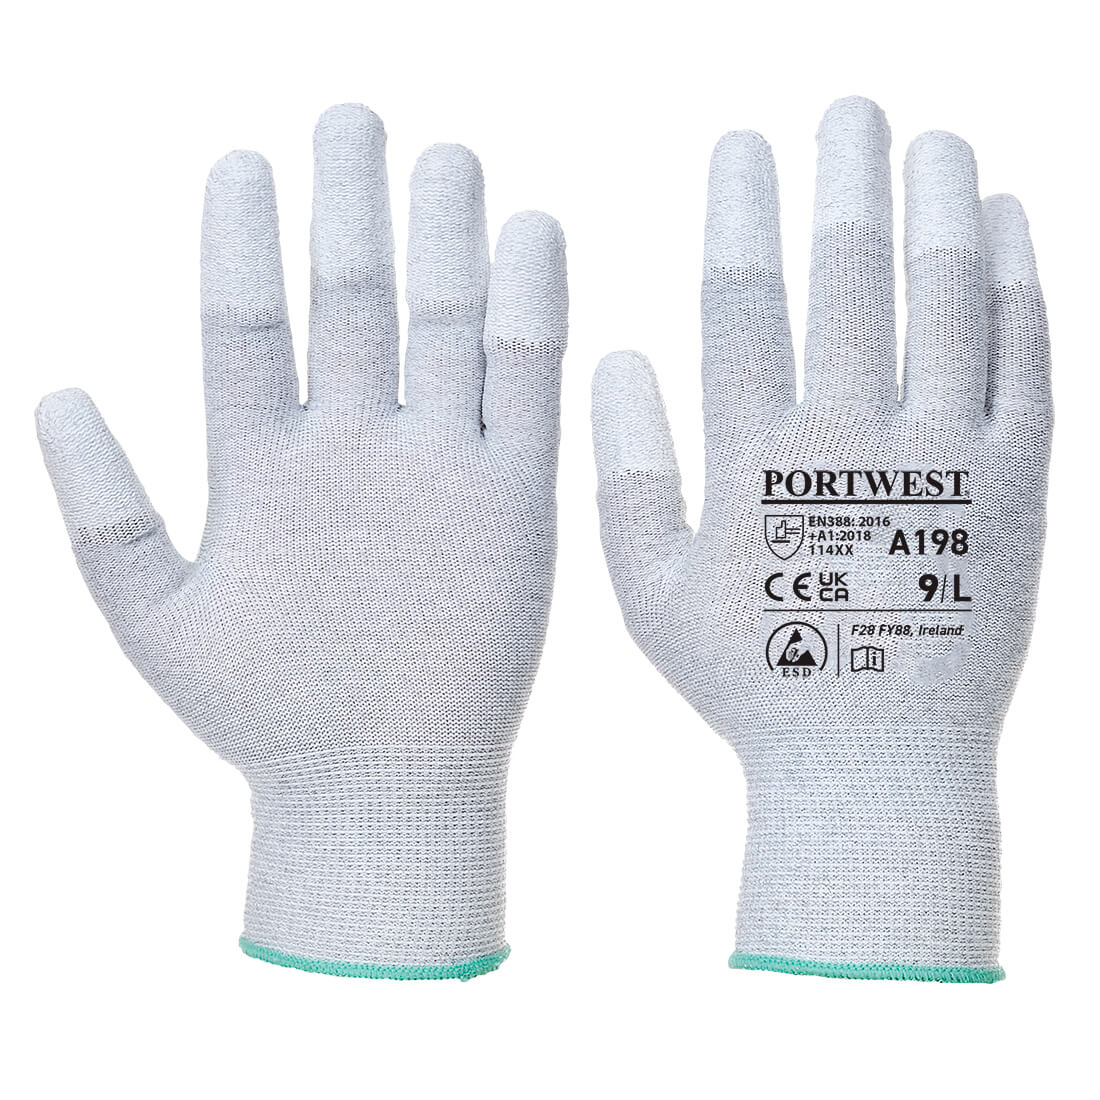 A198 Portwest® Antistatic PU coated Fingertip Work Gloves